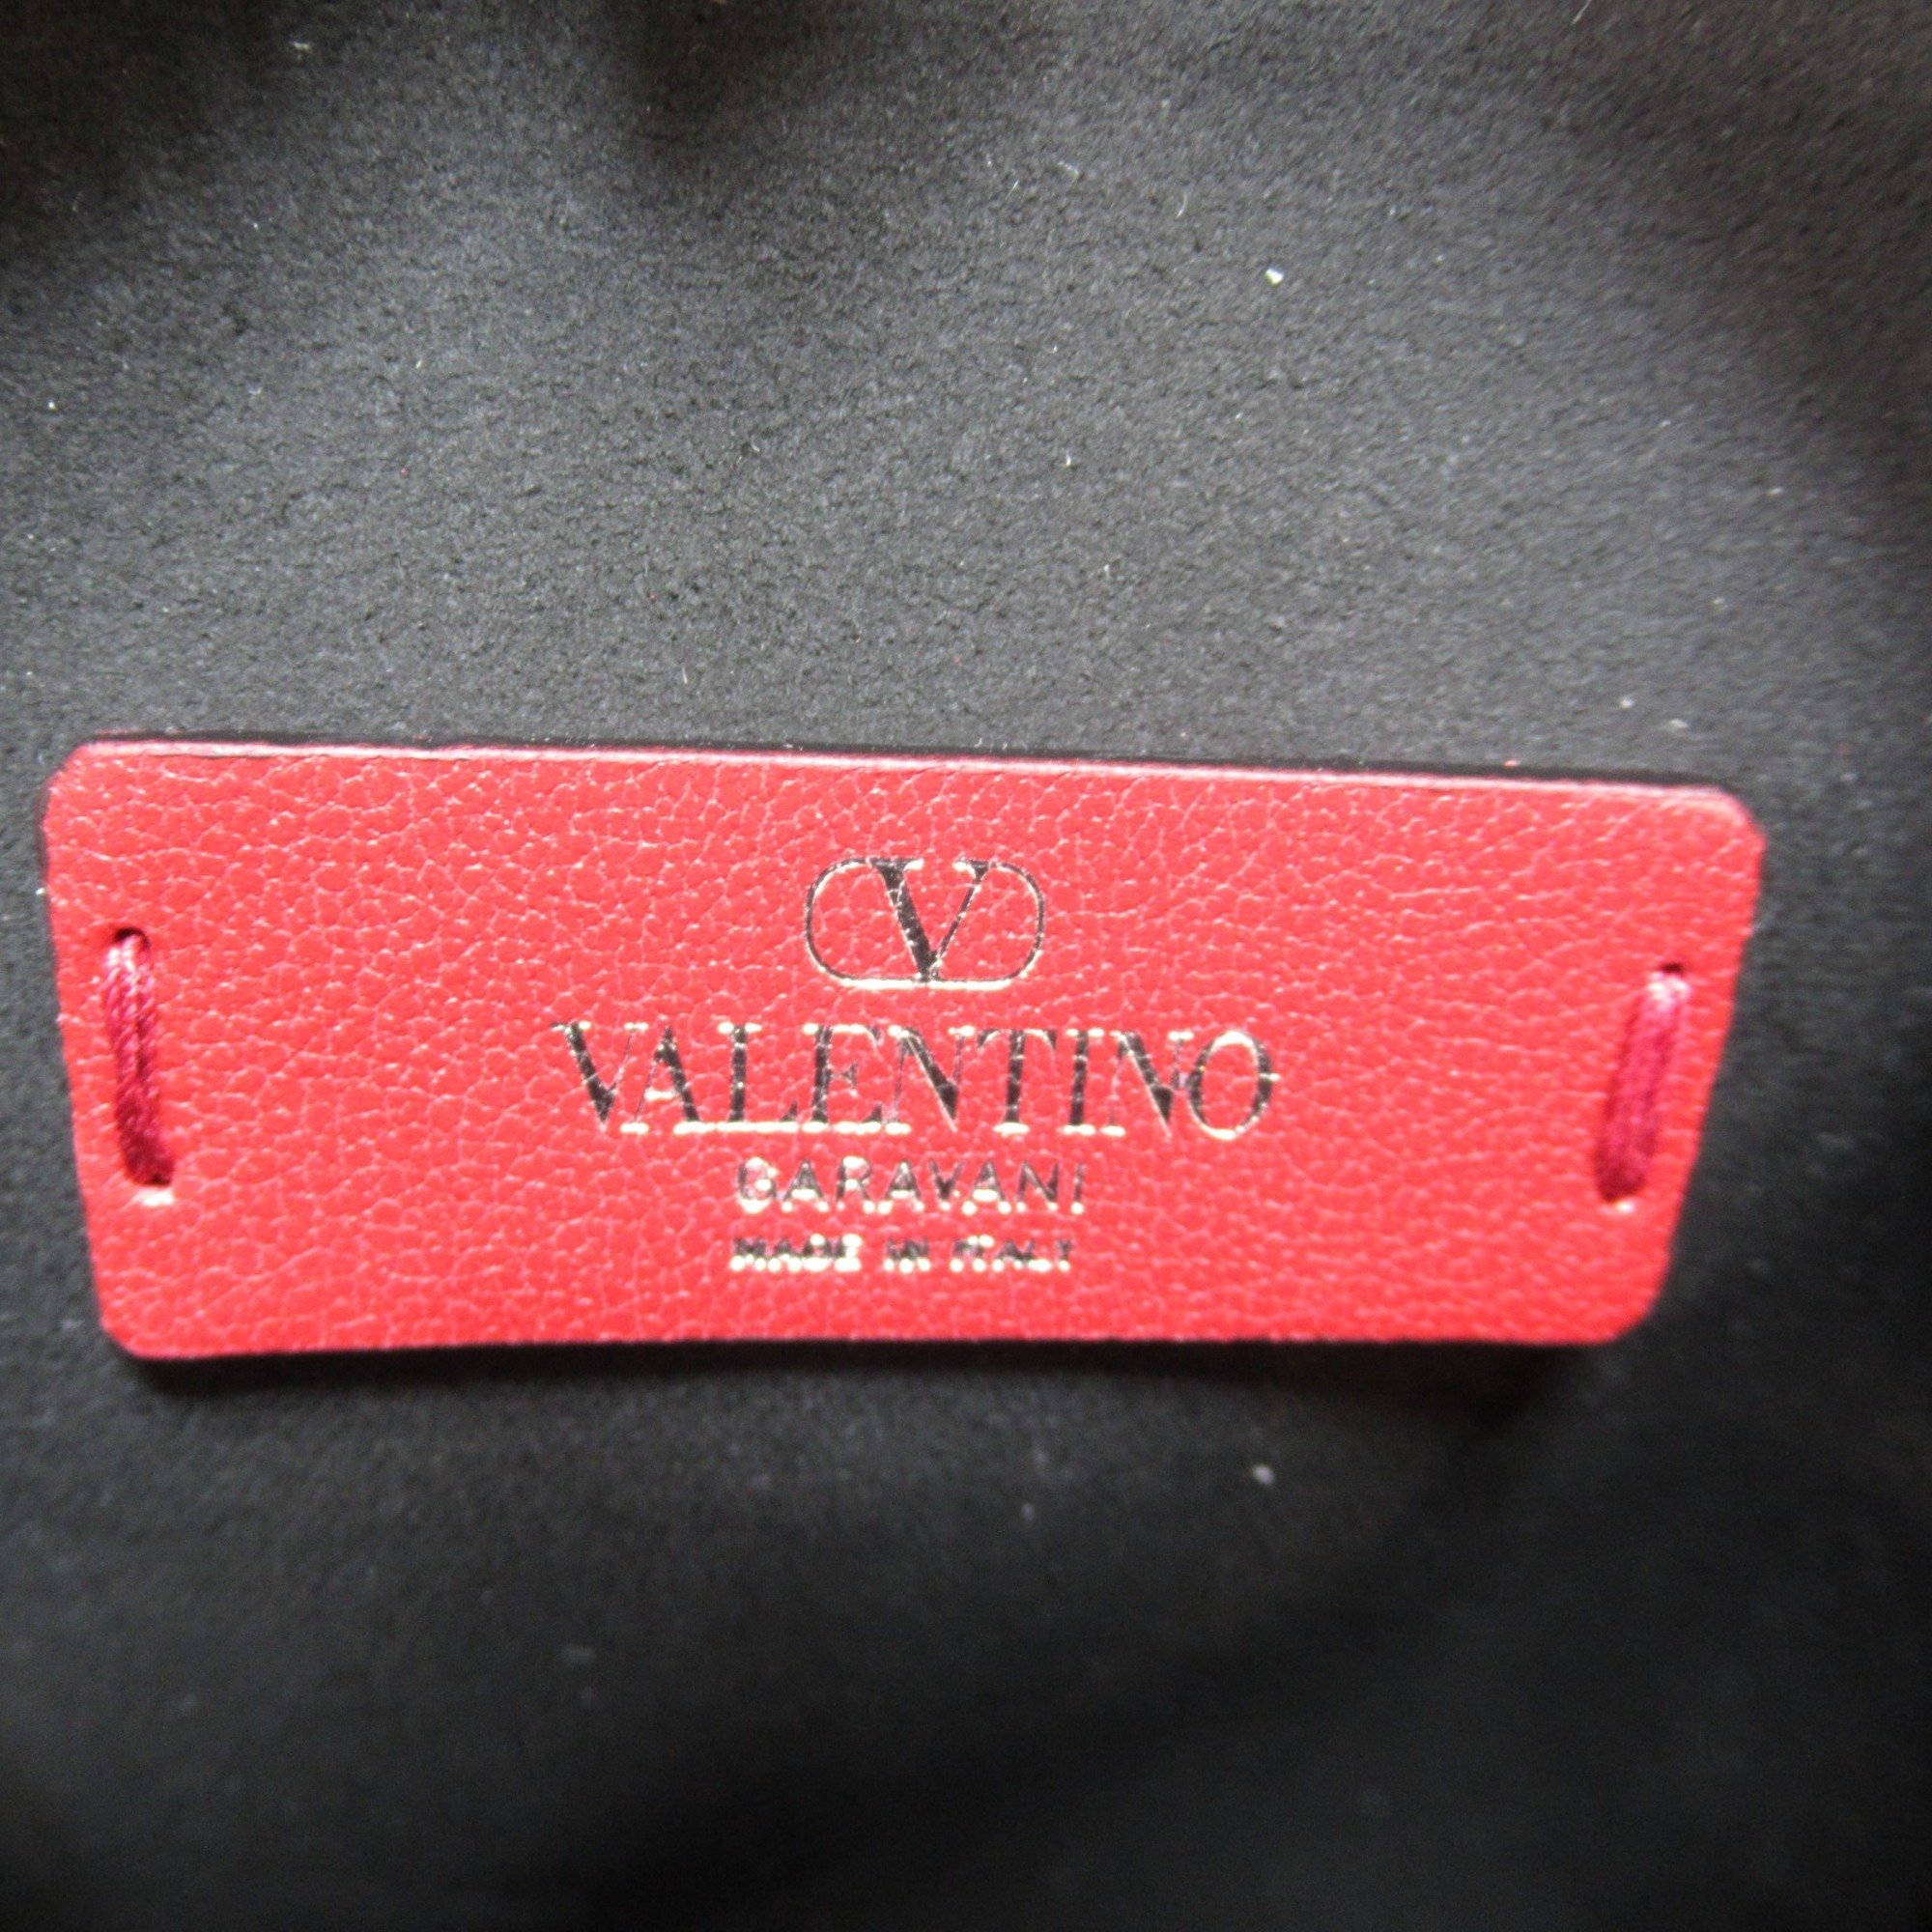 Valentino Shoulder Bag Black leather 3Y2B09430NI